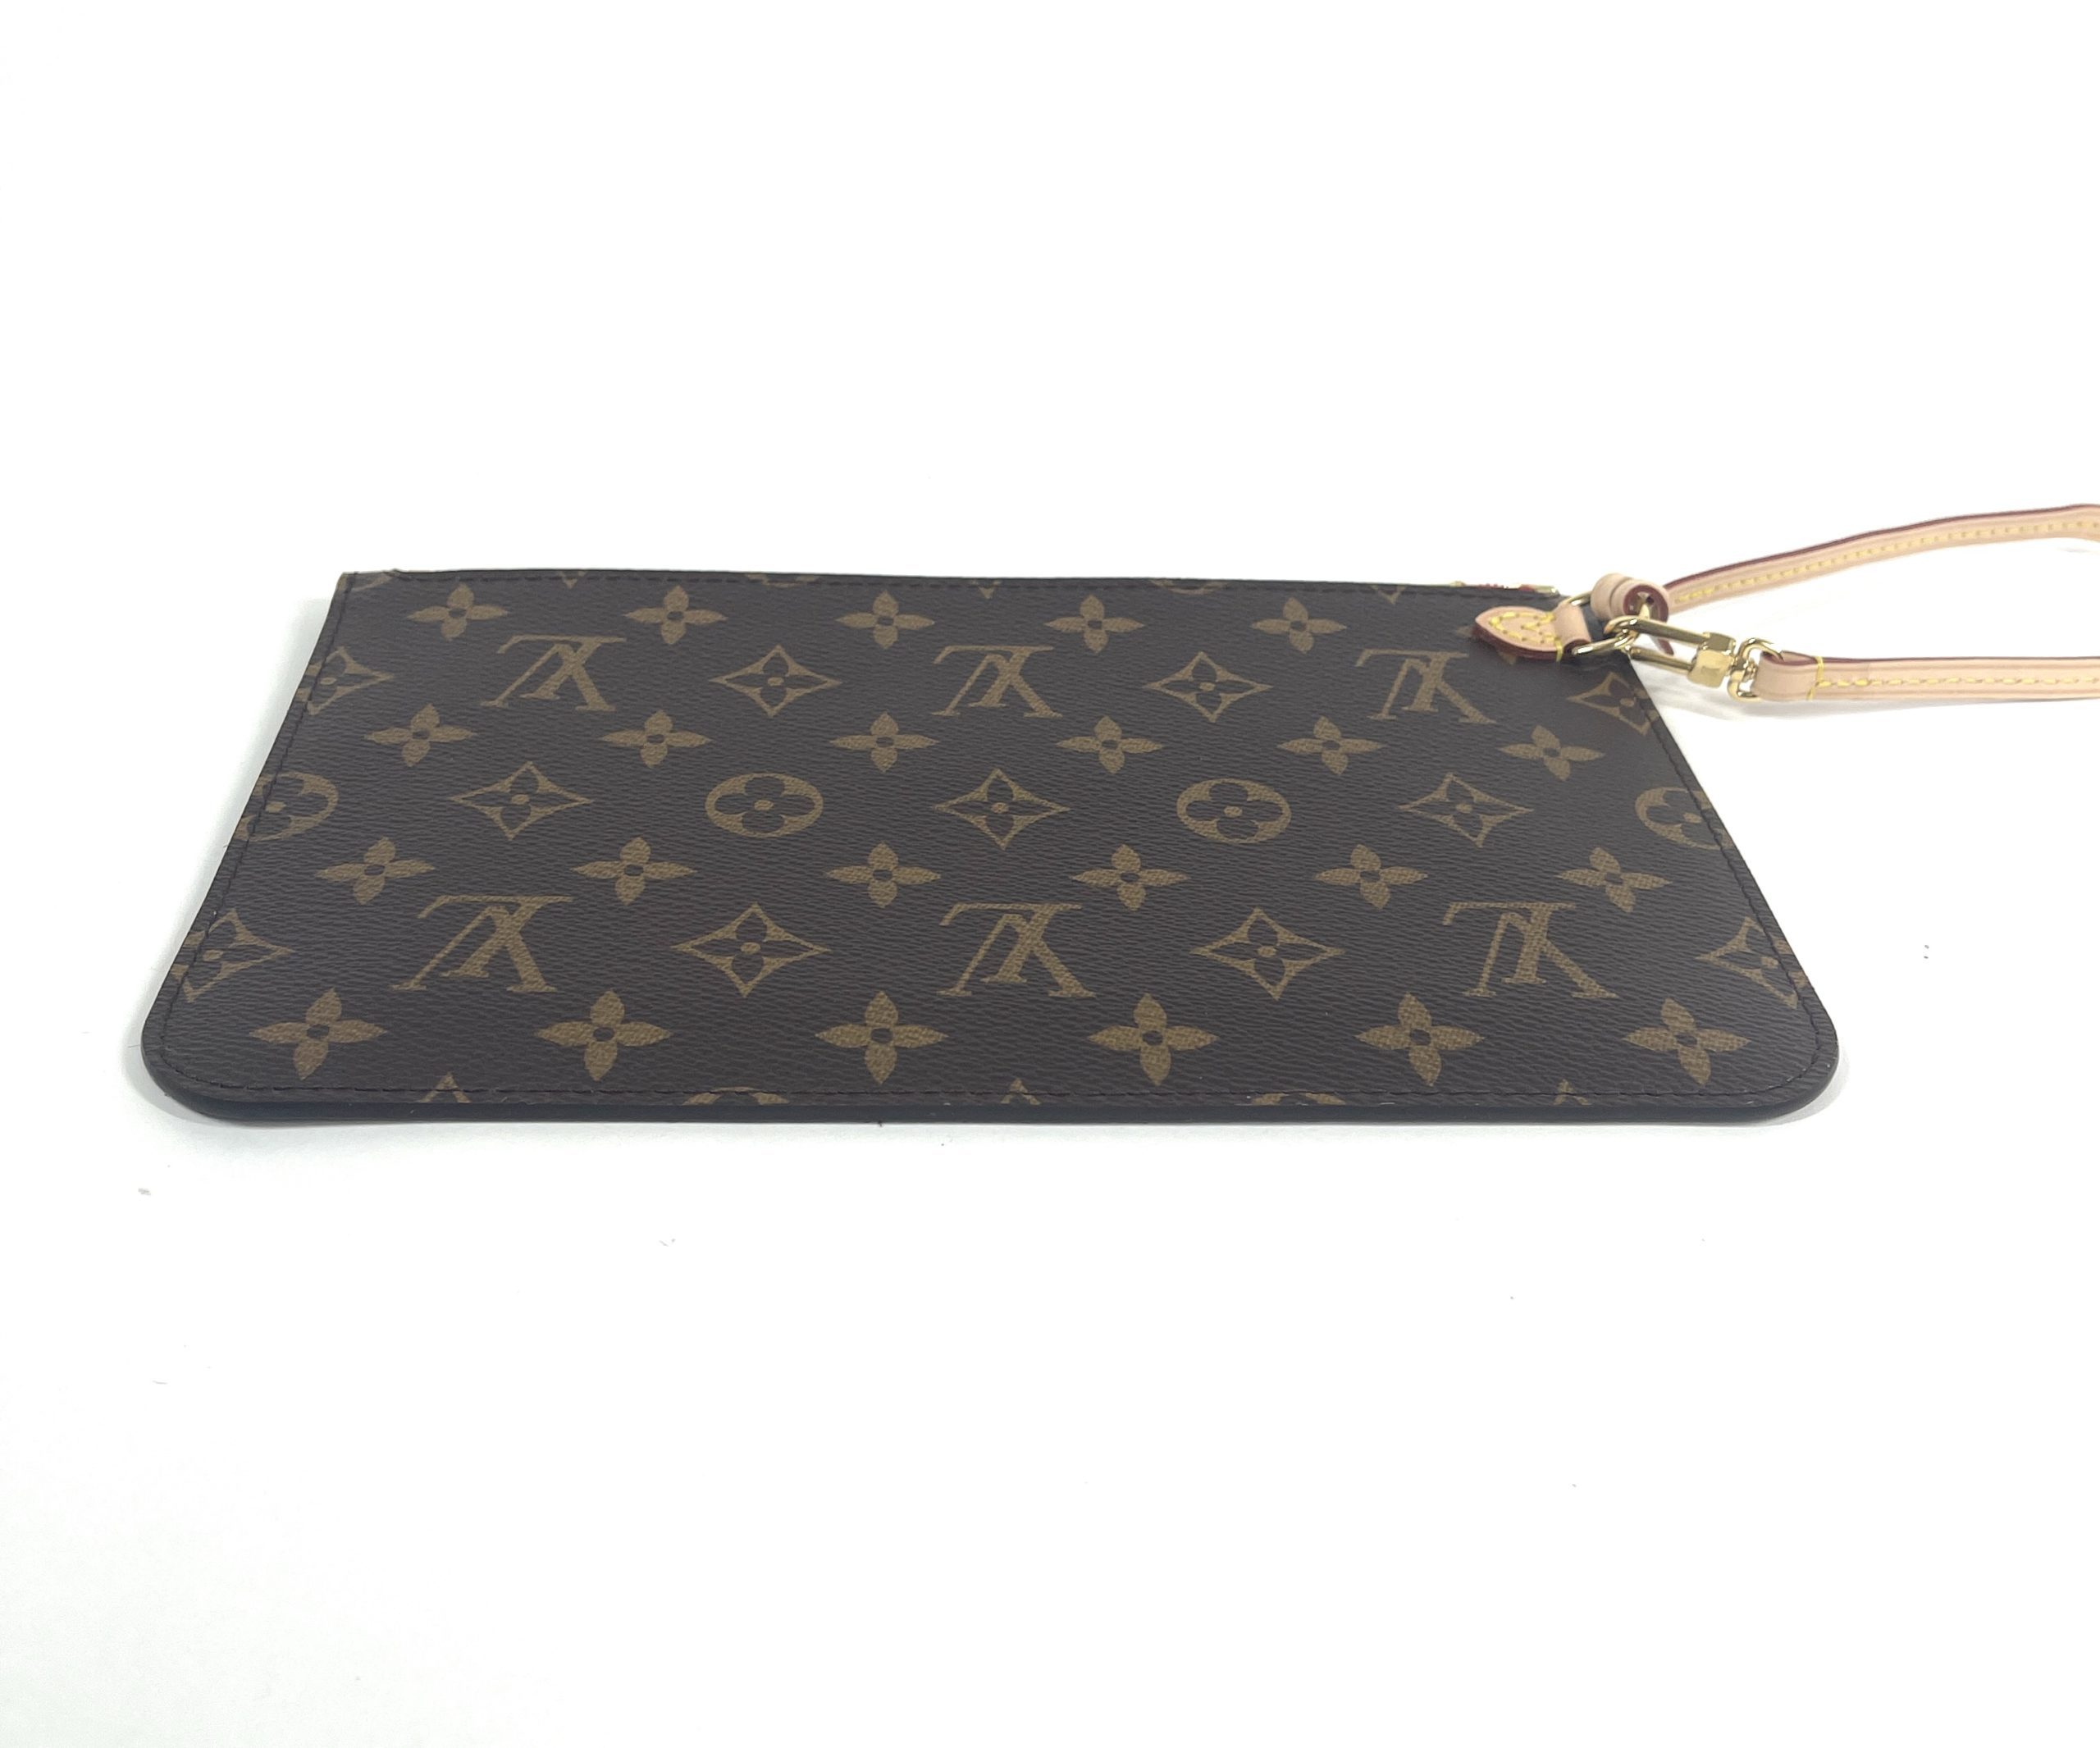 Louis Vuitton Monogram Neverfull Pouch - Brown Clutches, Handbags